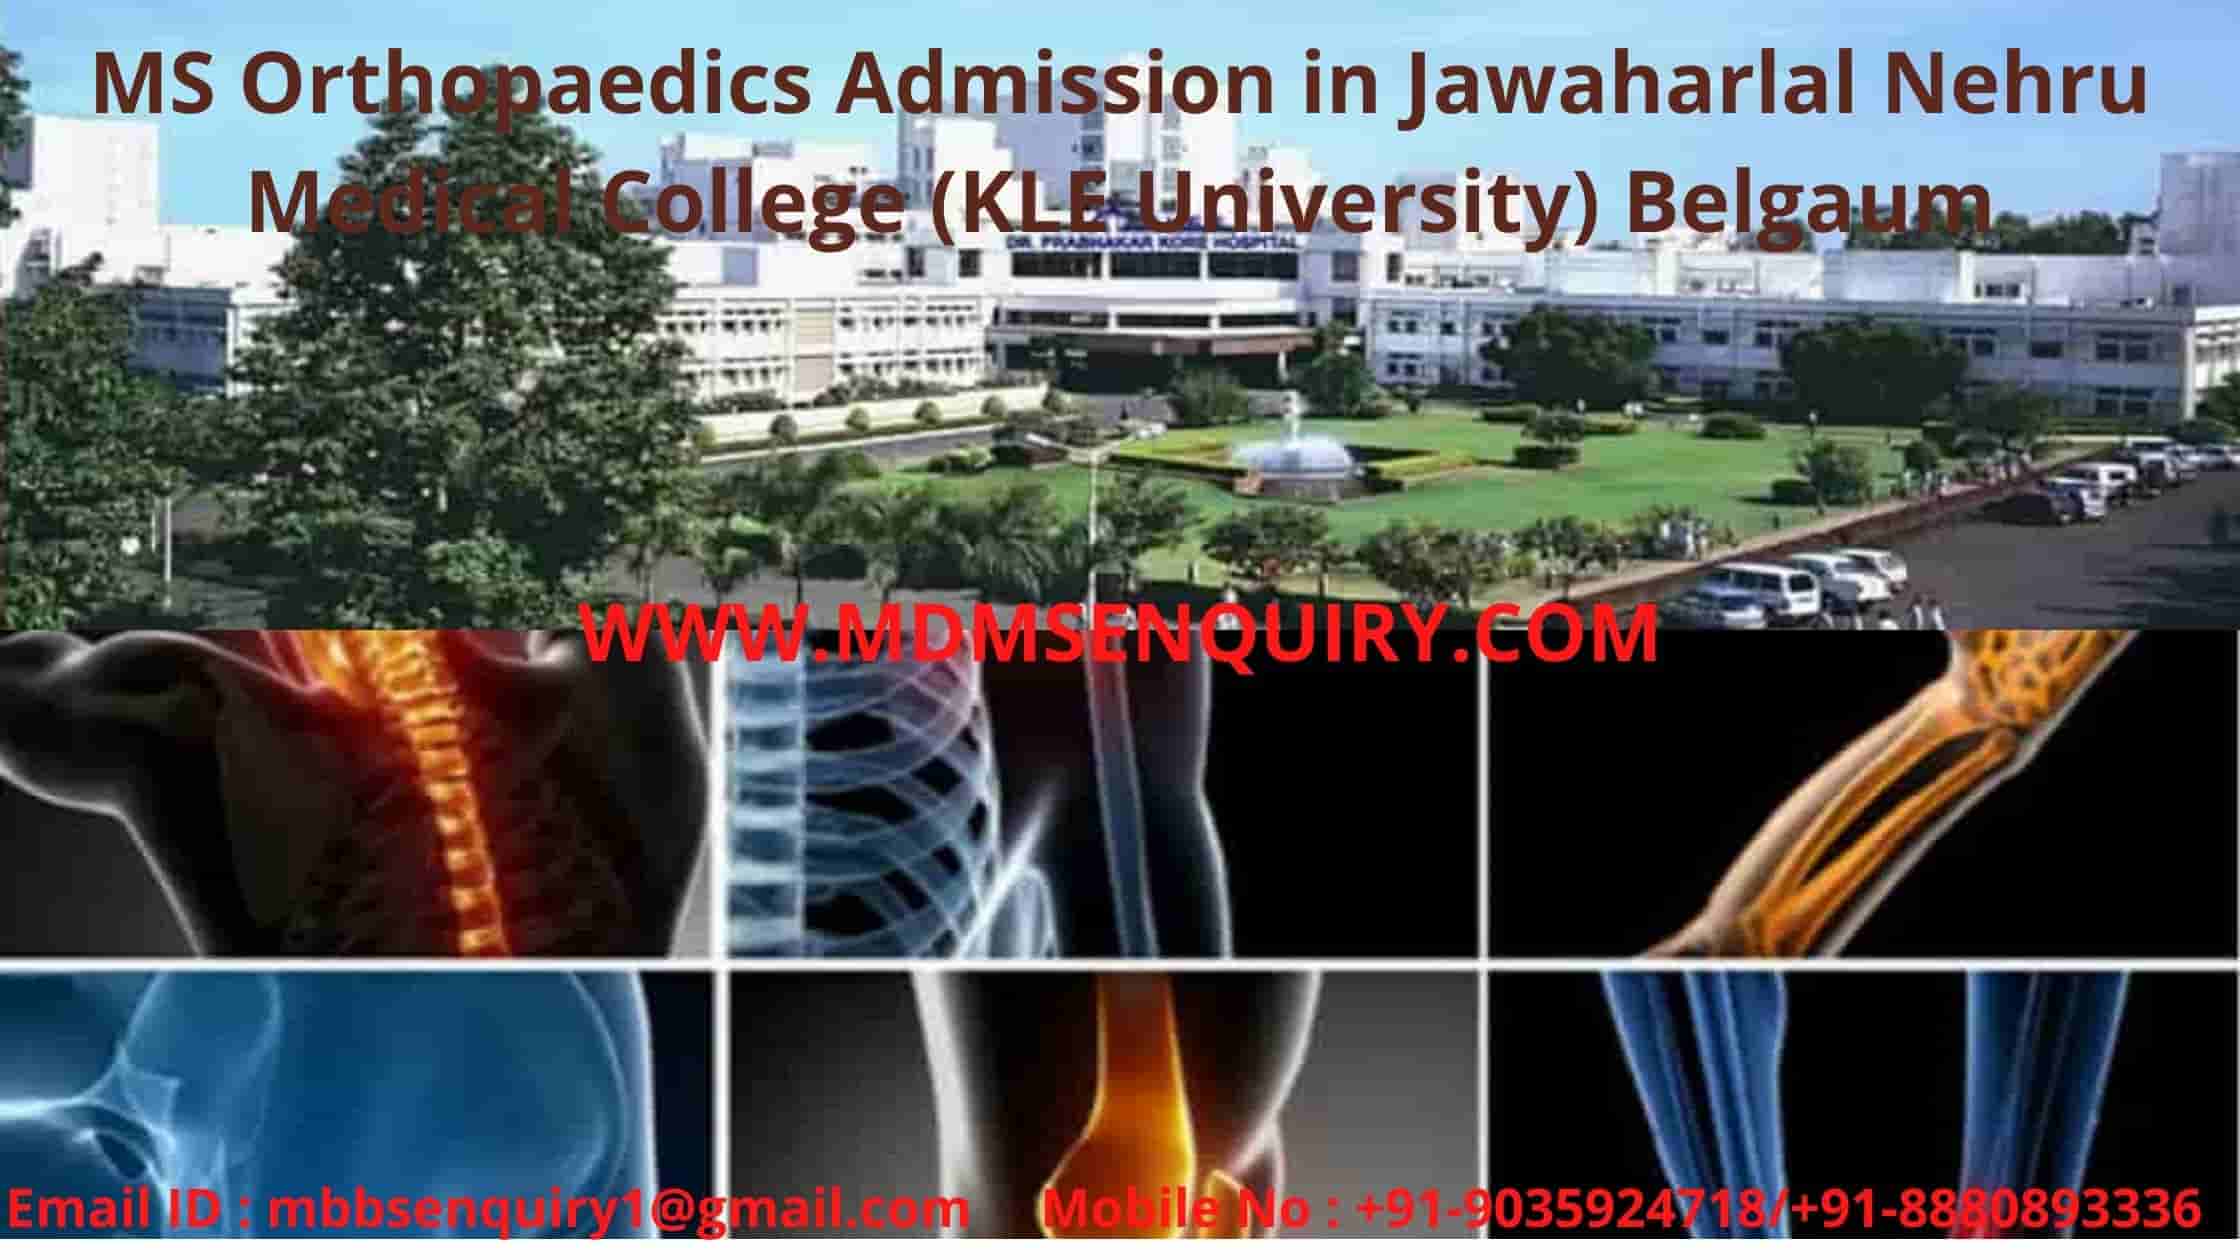 MS Orthopaedics admission in Jawaharlal Nehru Medical College (KLE University) Belgaum